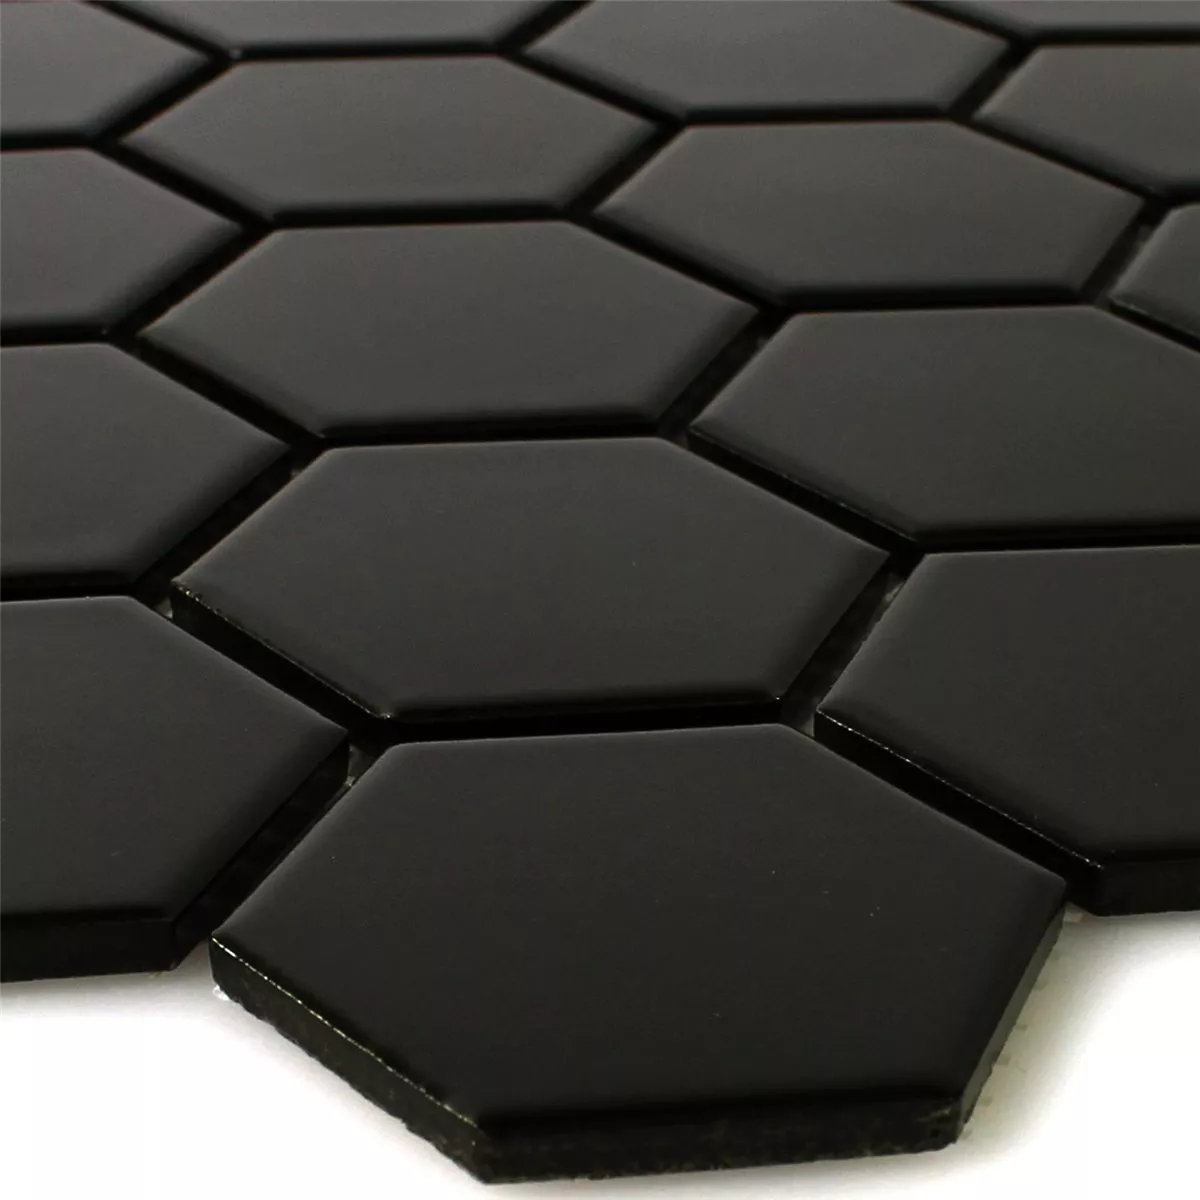 Sample Mosaic Tiles Ceramic Hexagon Black Mat